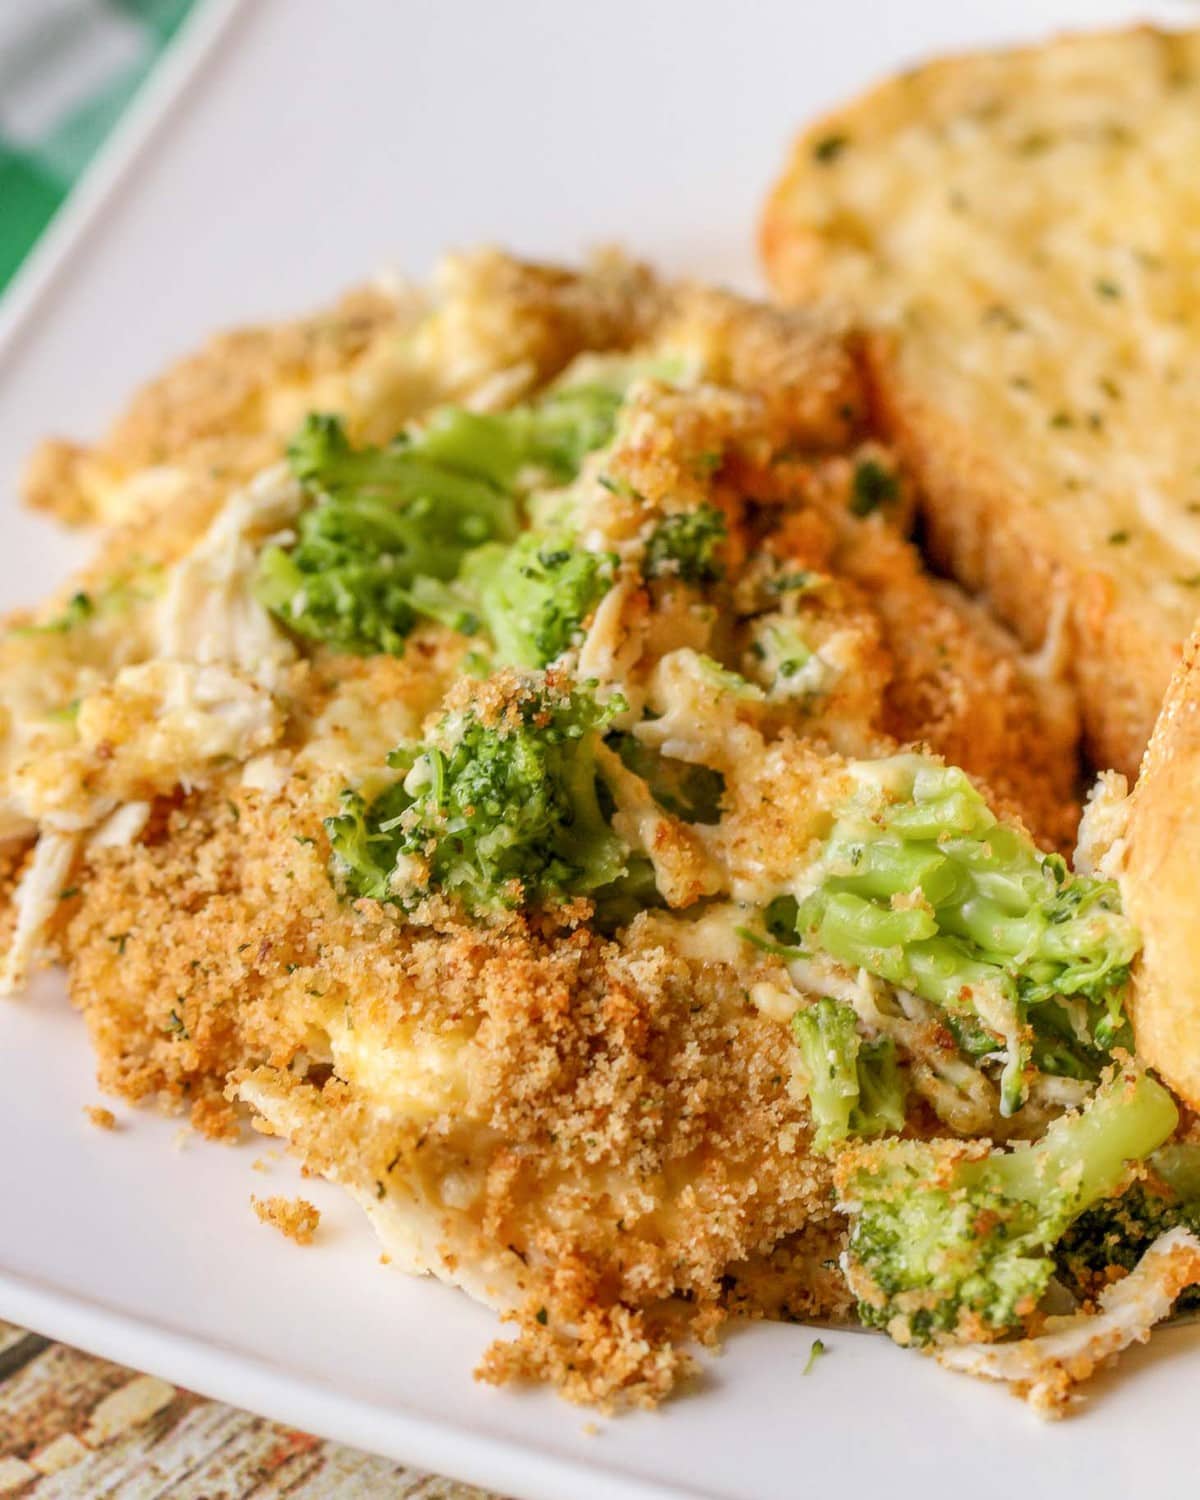 Chicken Broccoli Casserole close up served on a plate.